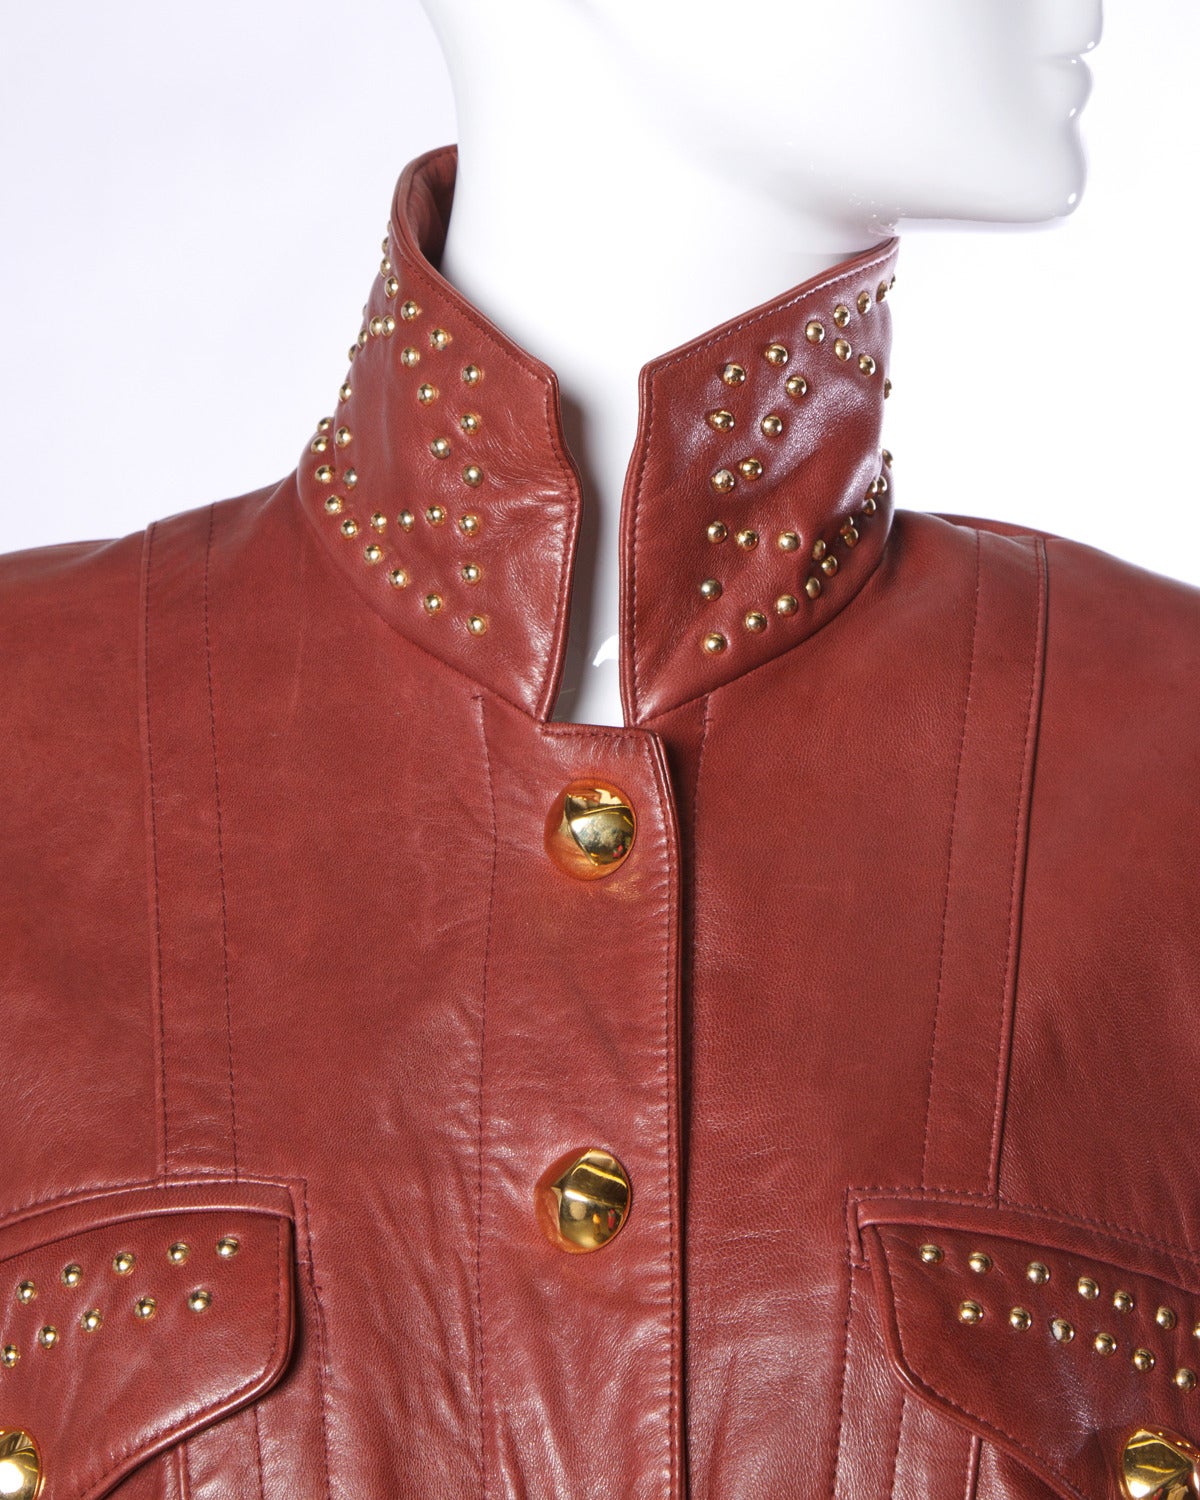 Unworn 1990 Escada Buttery Leather Jacket with Original Tags & Garment Bag 3